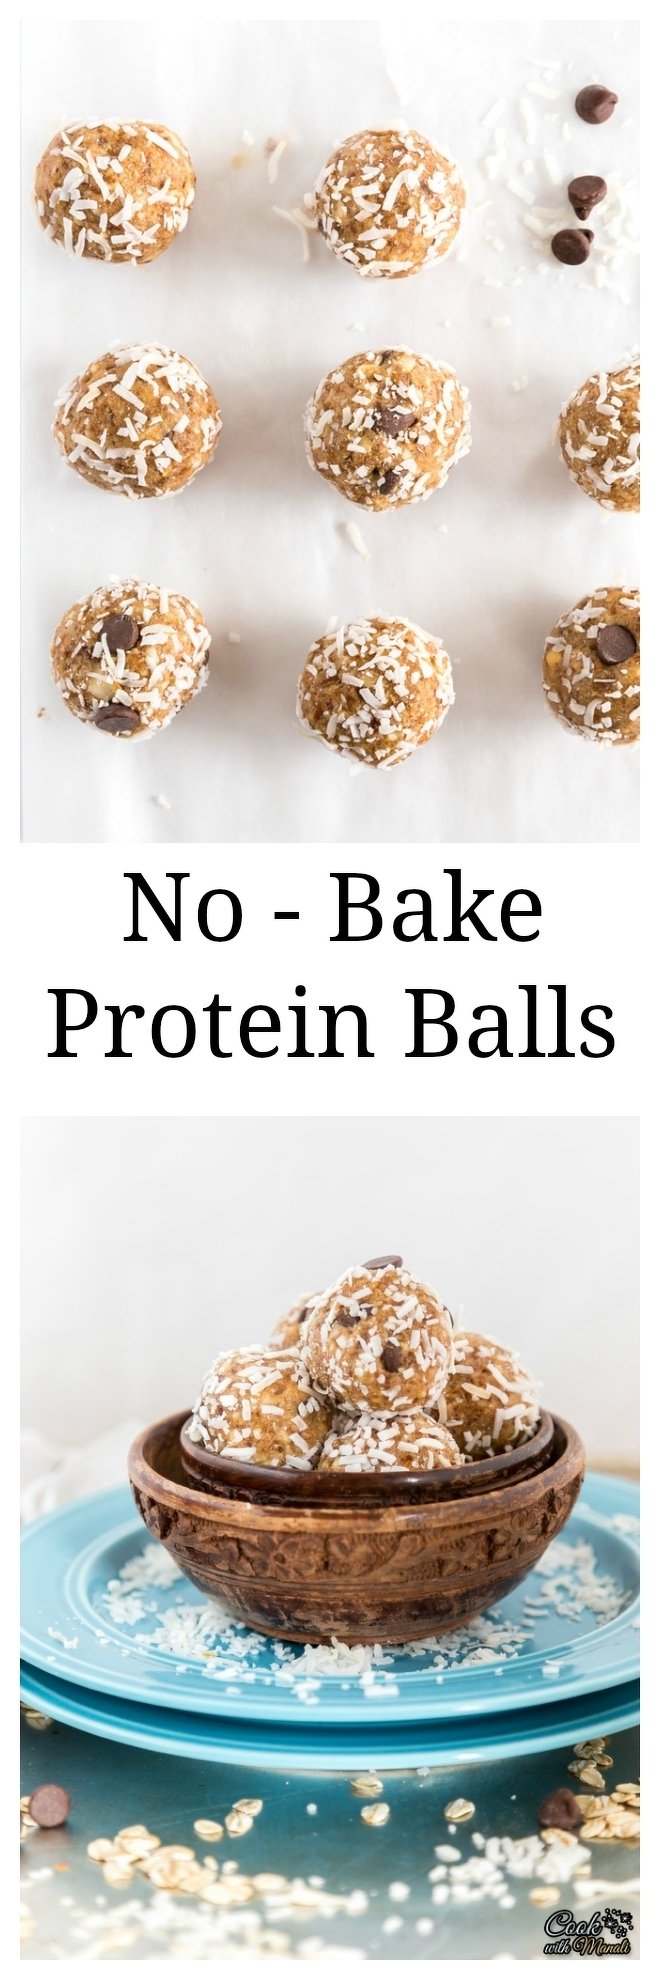 No Bake Protein Balls Collage-nocwm